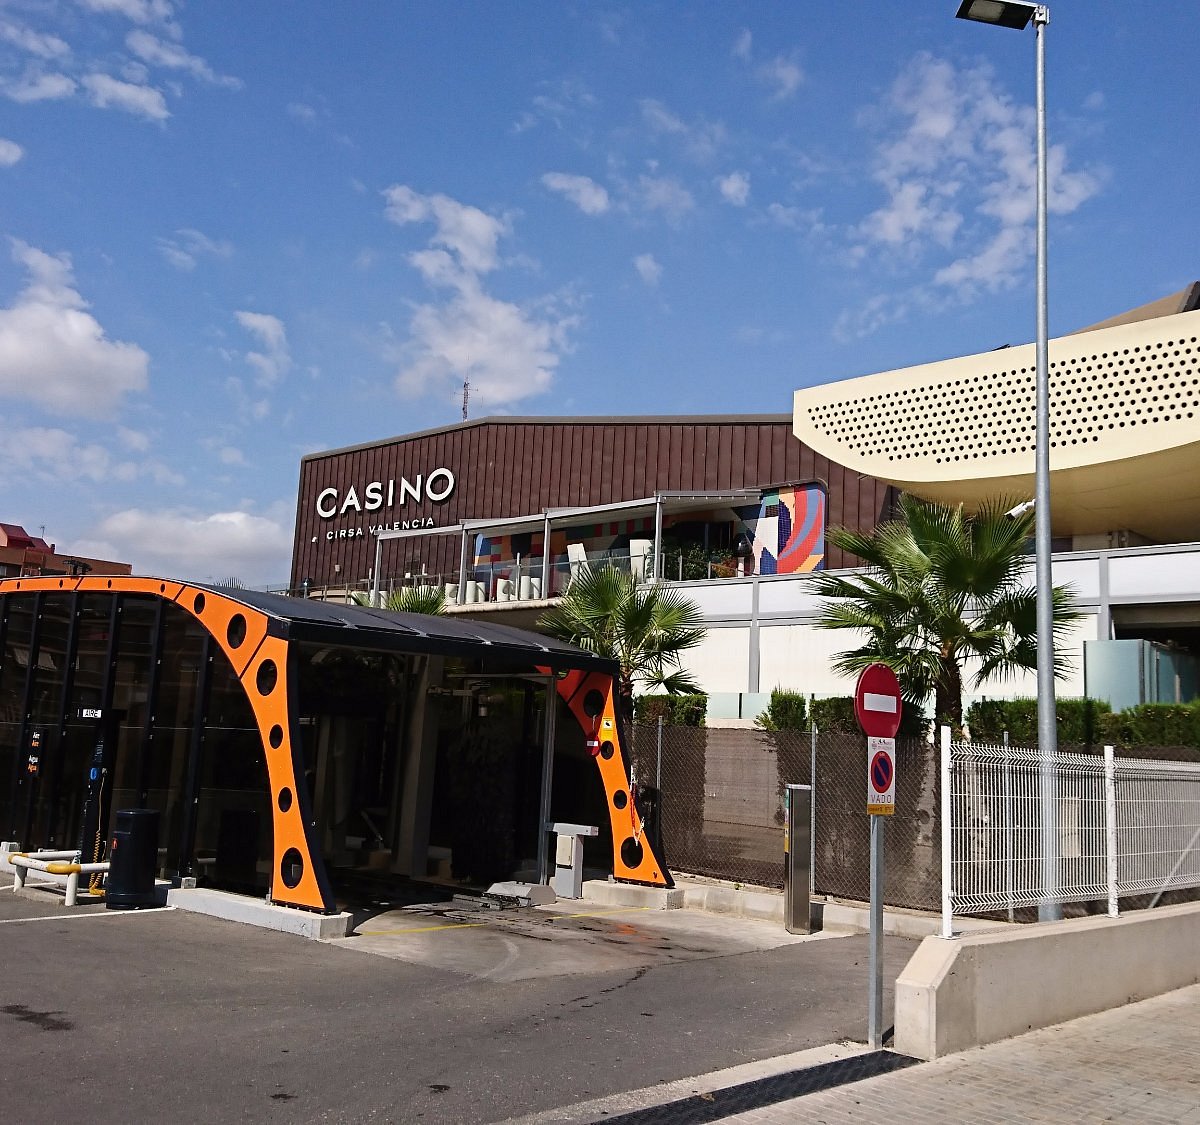 Aэропорт Valencia (VLC) → Casino Cirsa Valencia: 5 способов добраться от €3 | Rome2rio